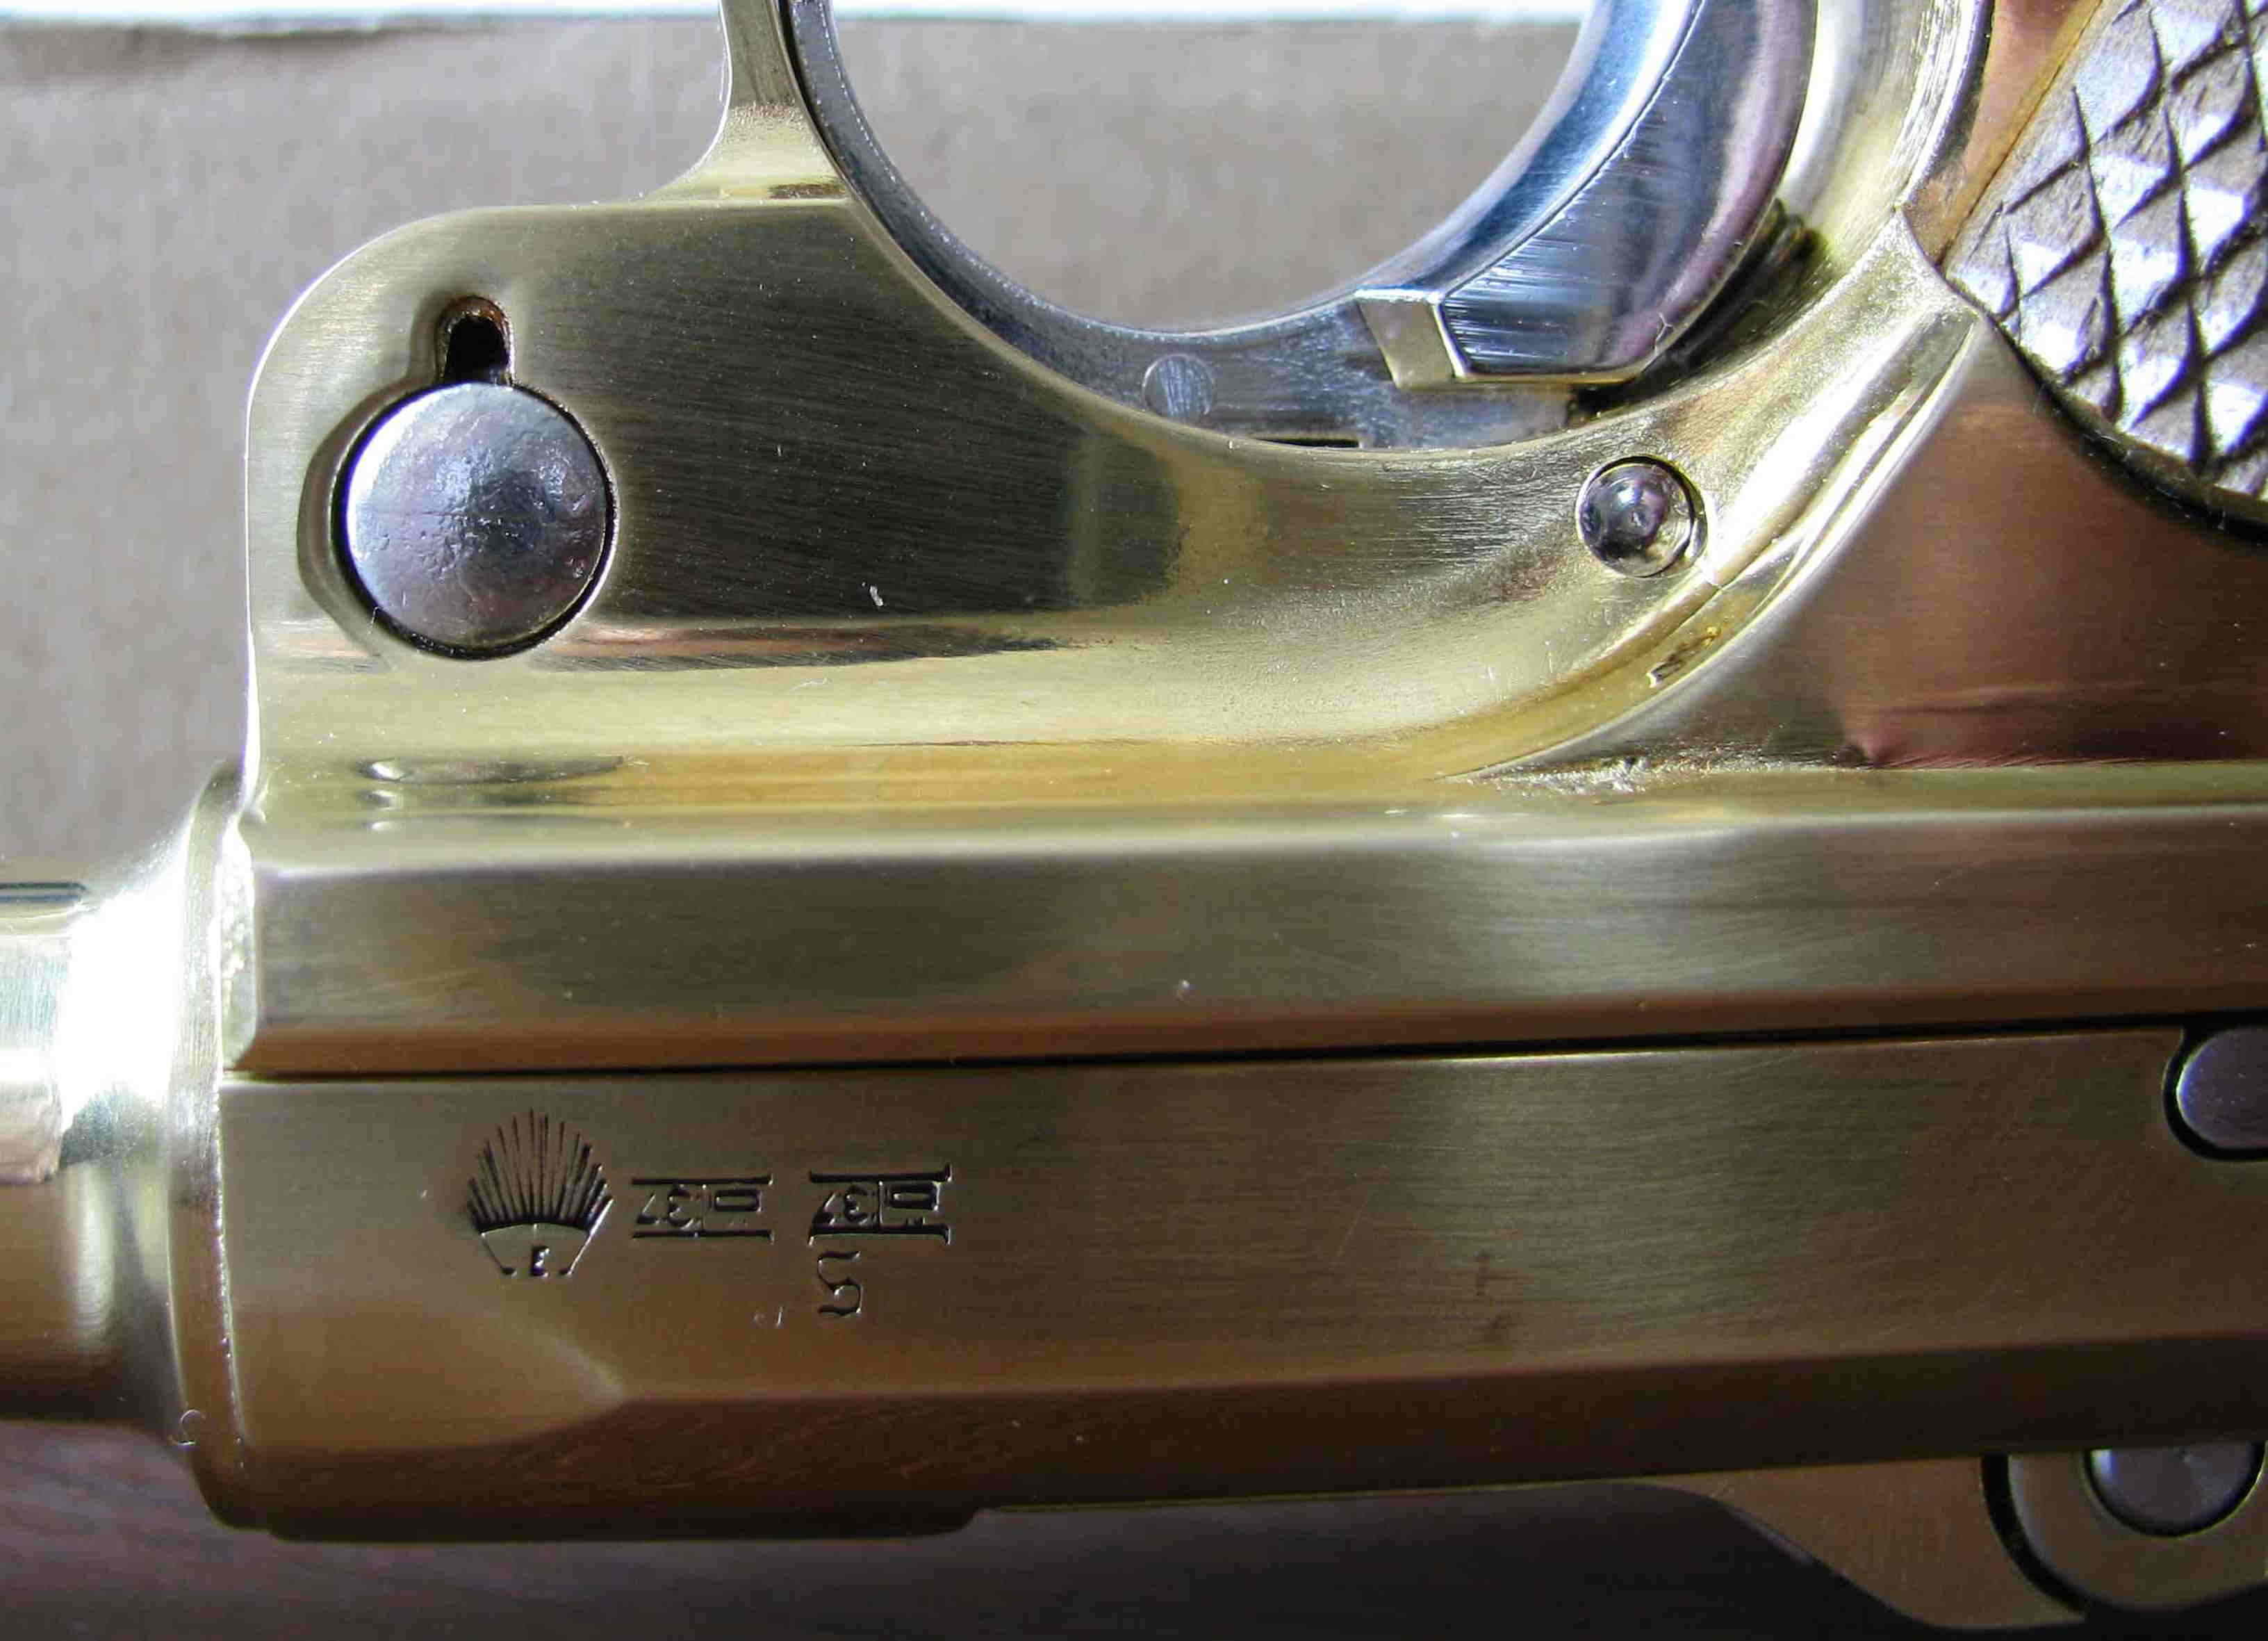 Parabellum Luger P08 от Мarushin 4 дюйма Коллекционная модель Парабеллум Люгер П08